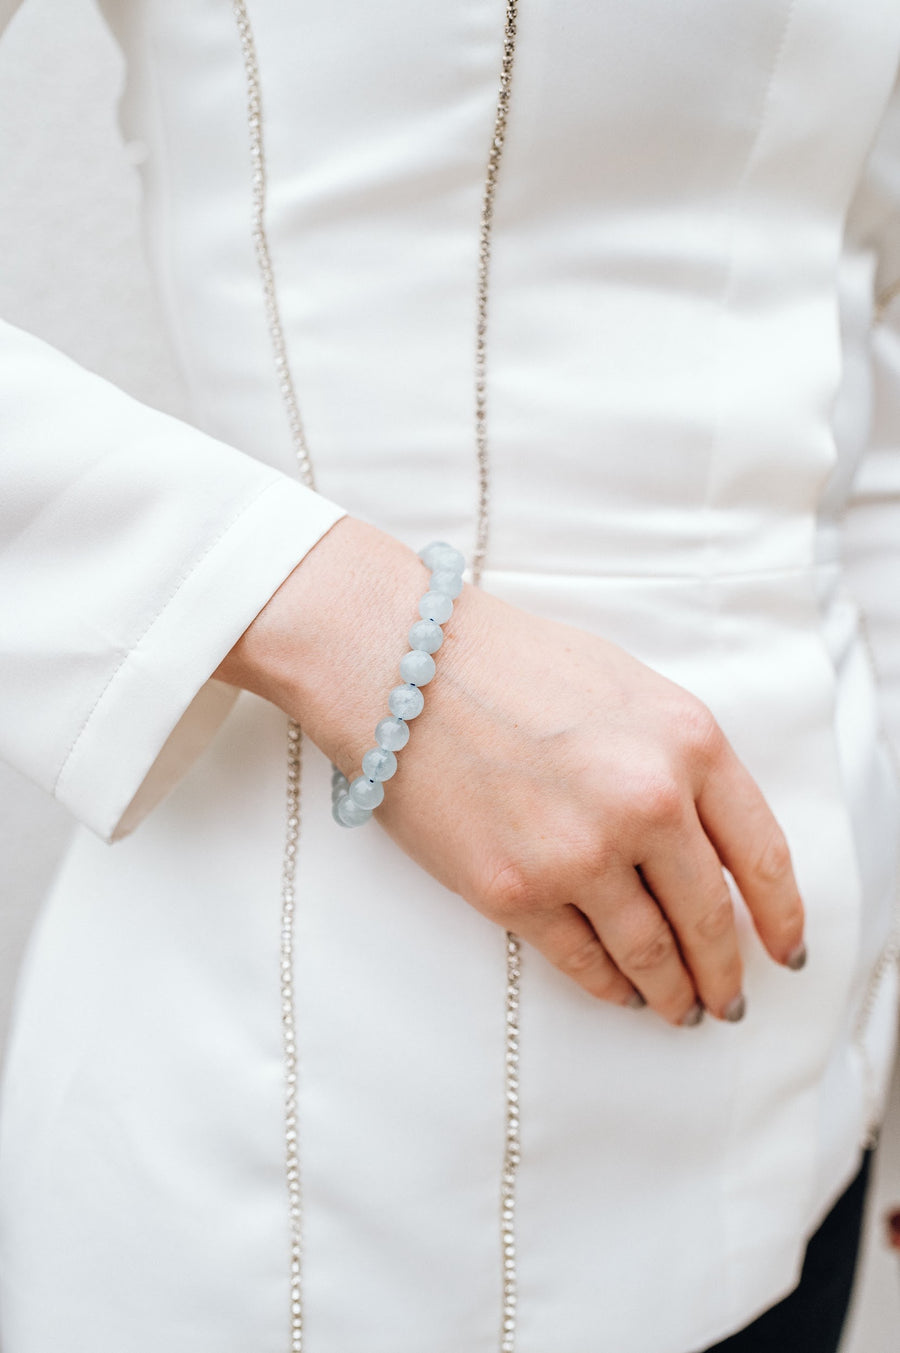 Aquamarine beaded bracelet